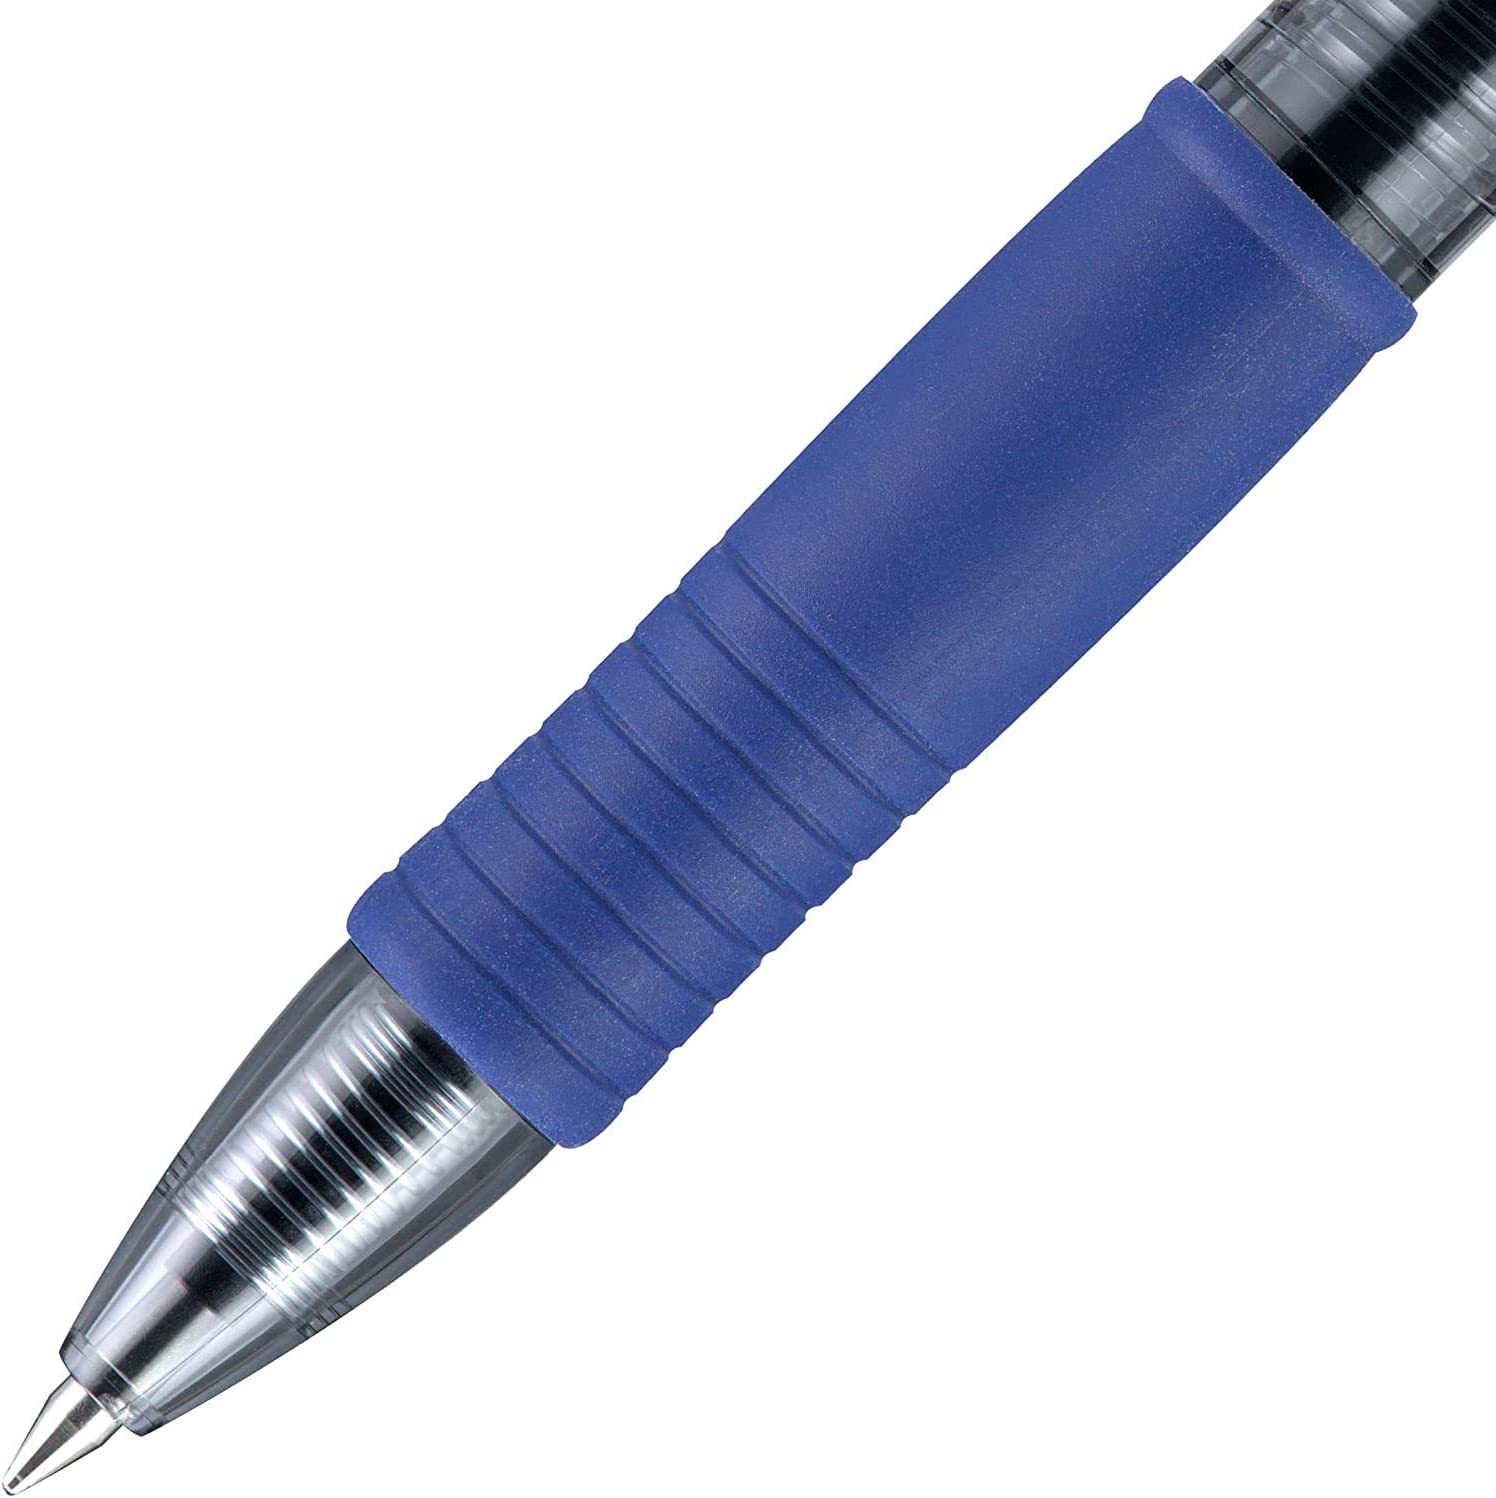 XIZE SH Fine Tip Pen 0.5mm Black Ink Pens for Writing Comfortable Writech  Pen